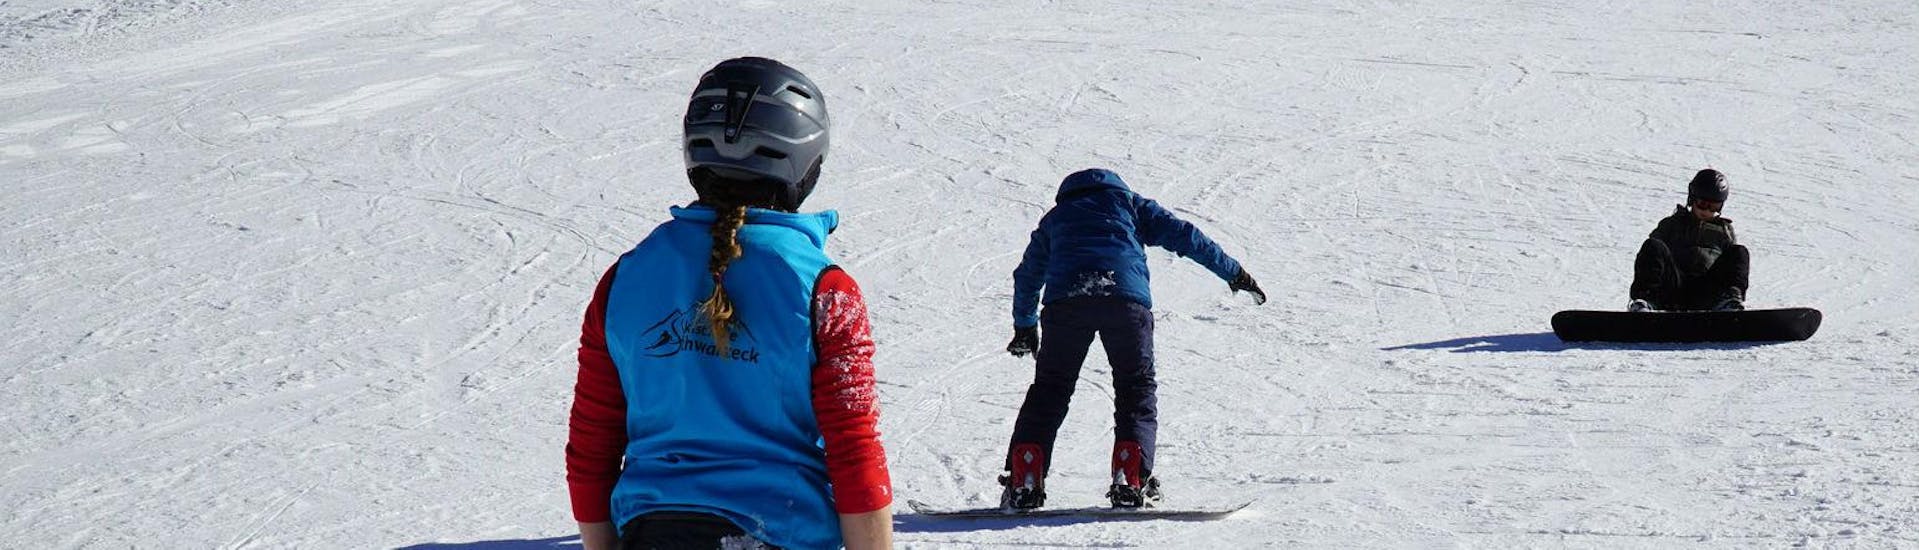 Snowboard Privatlehrer - Alle Levels & Altersgruppen.